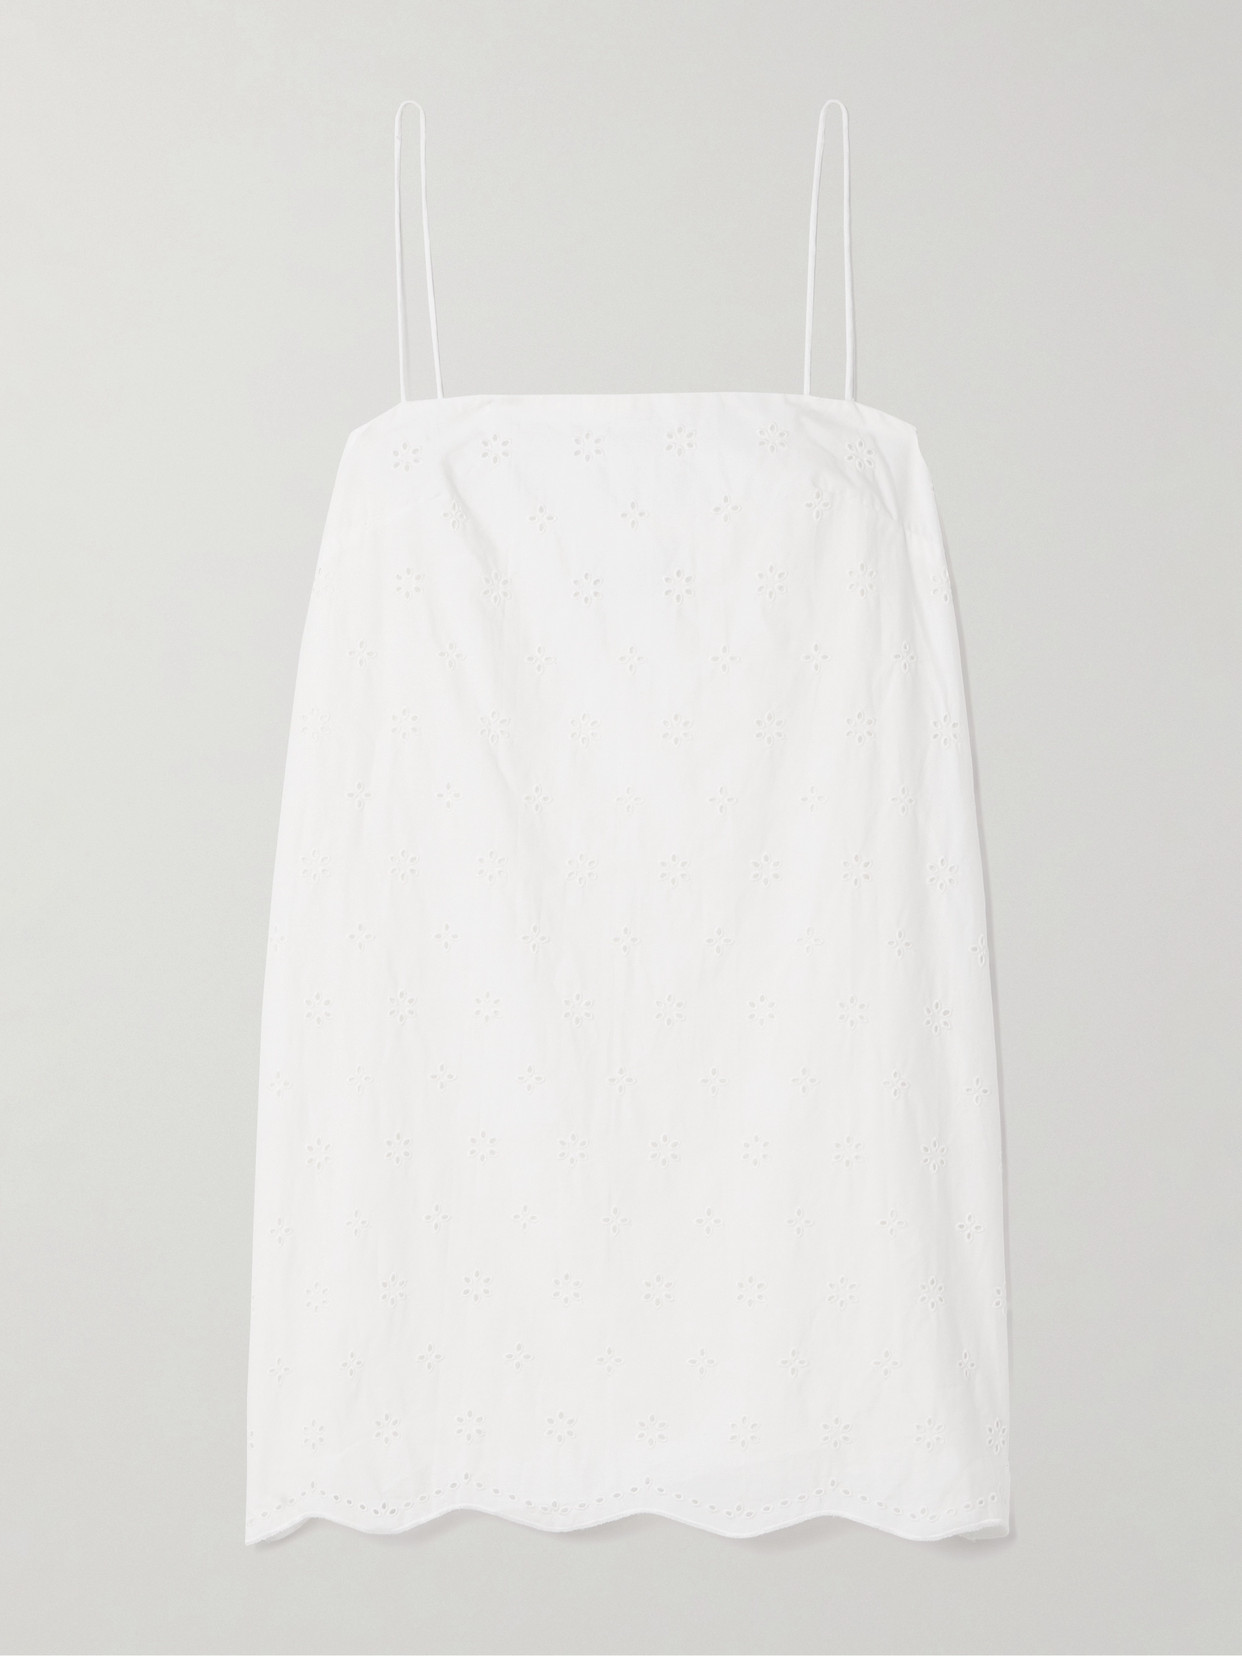 + Net Sustain Broderie Anglaise Organic Cotton Mini Dress